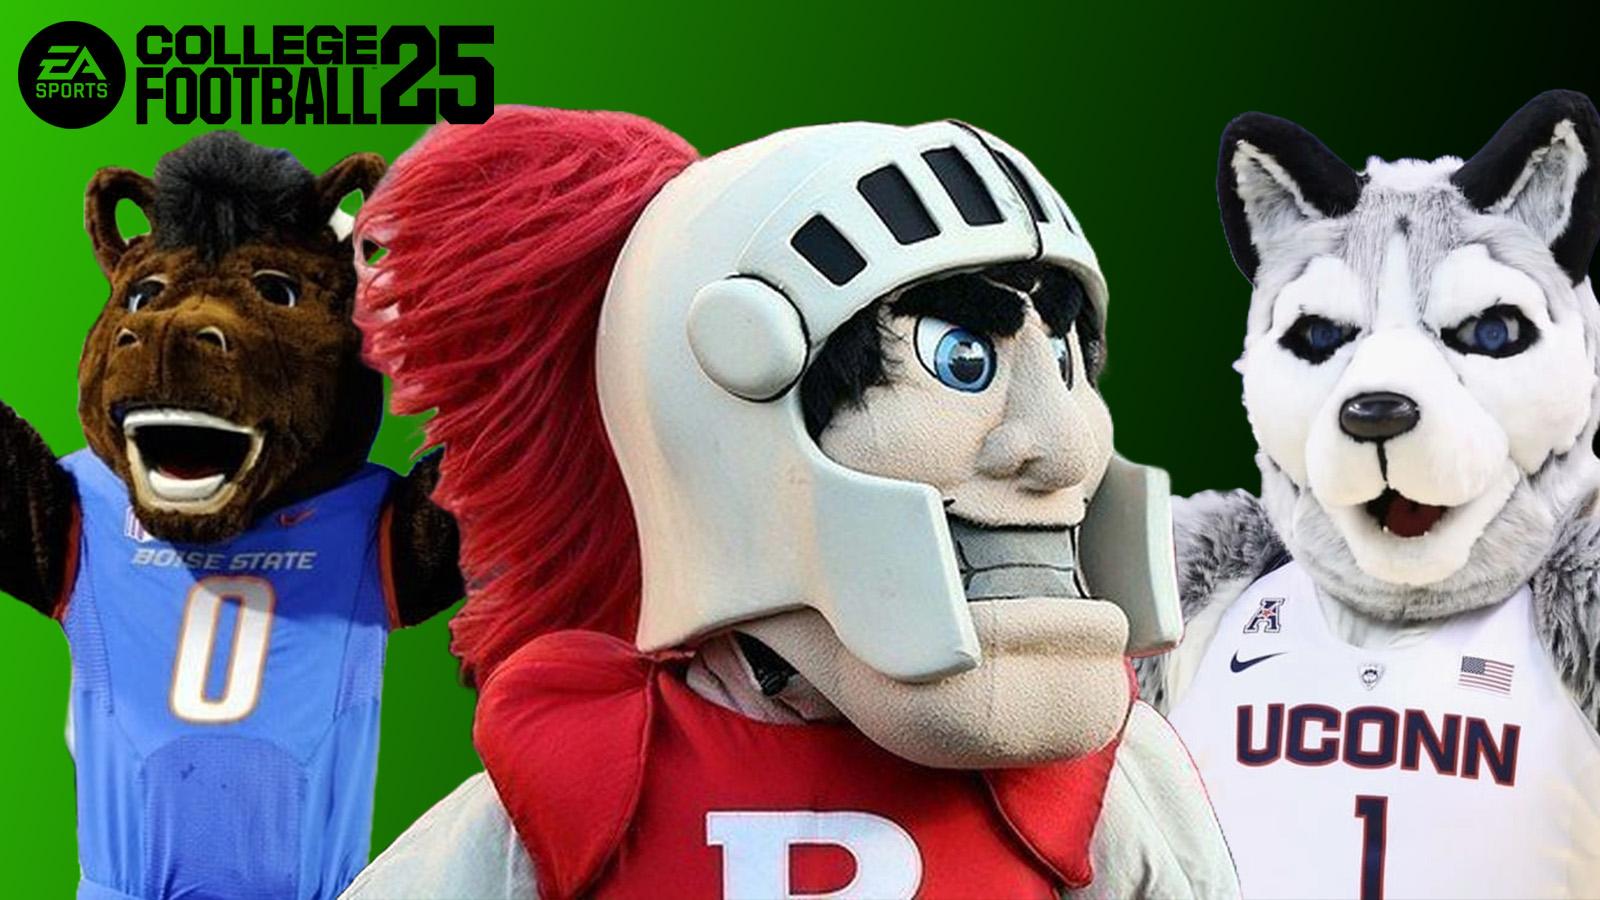 College mascots